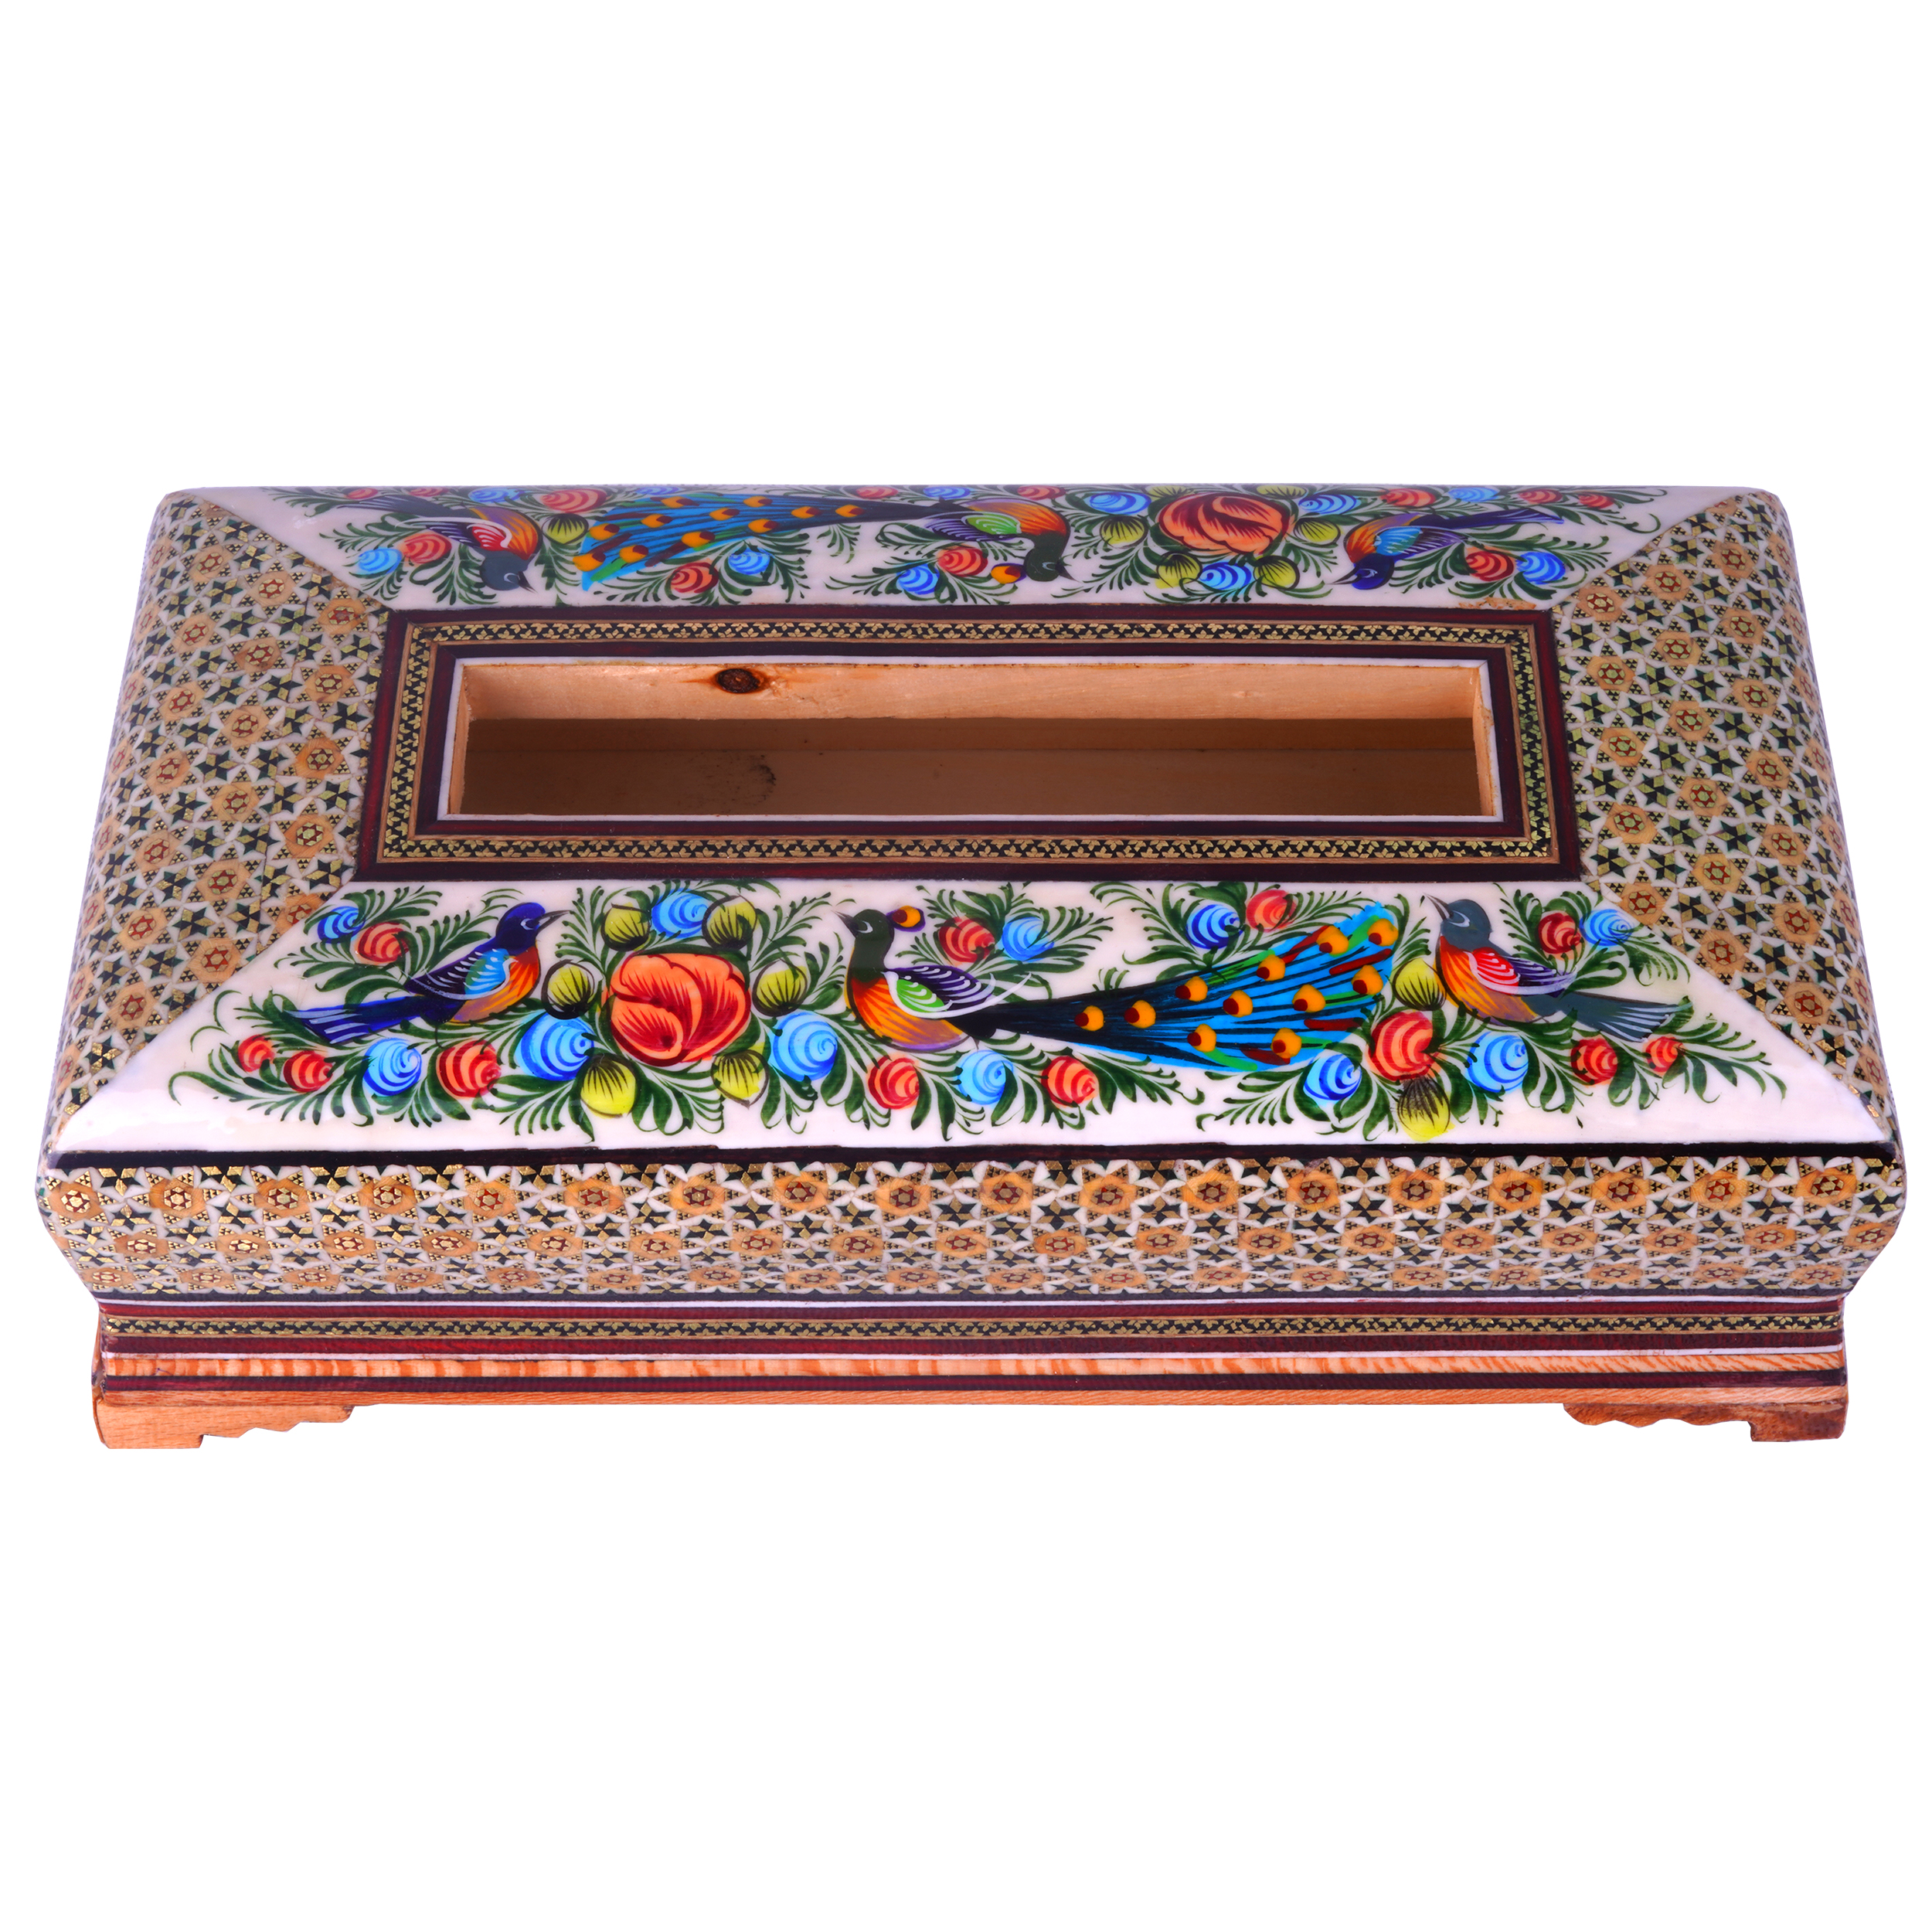 Inlay handicraft tissue box, code 6